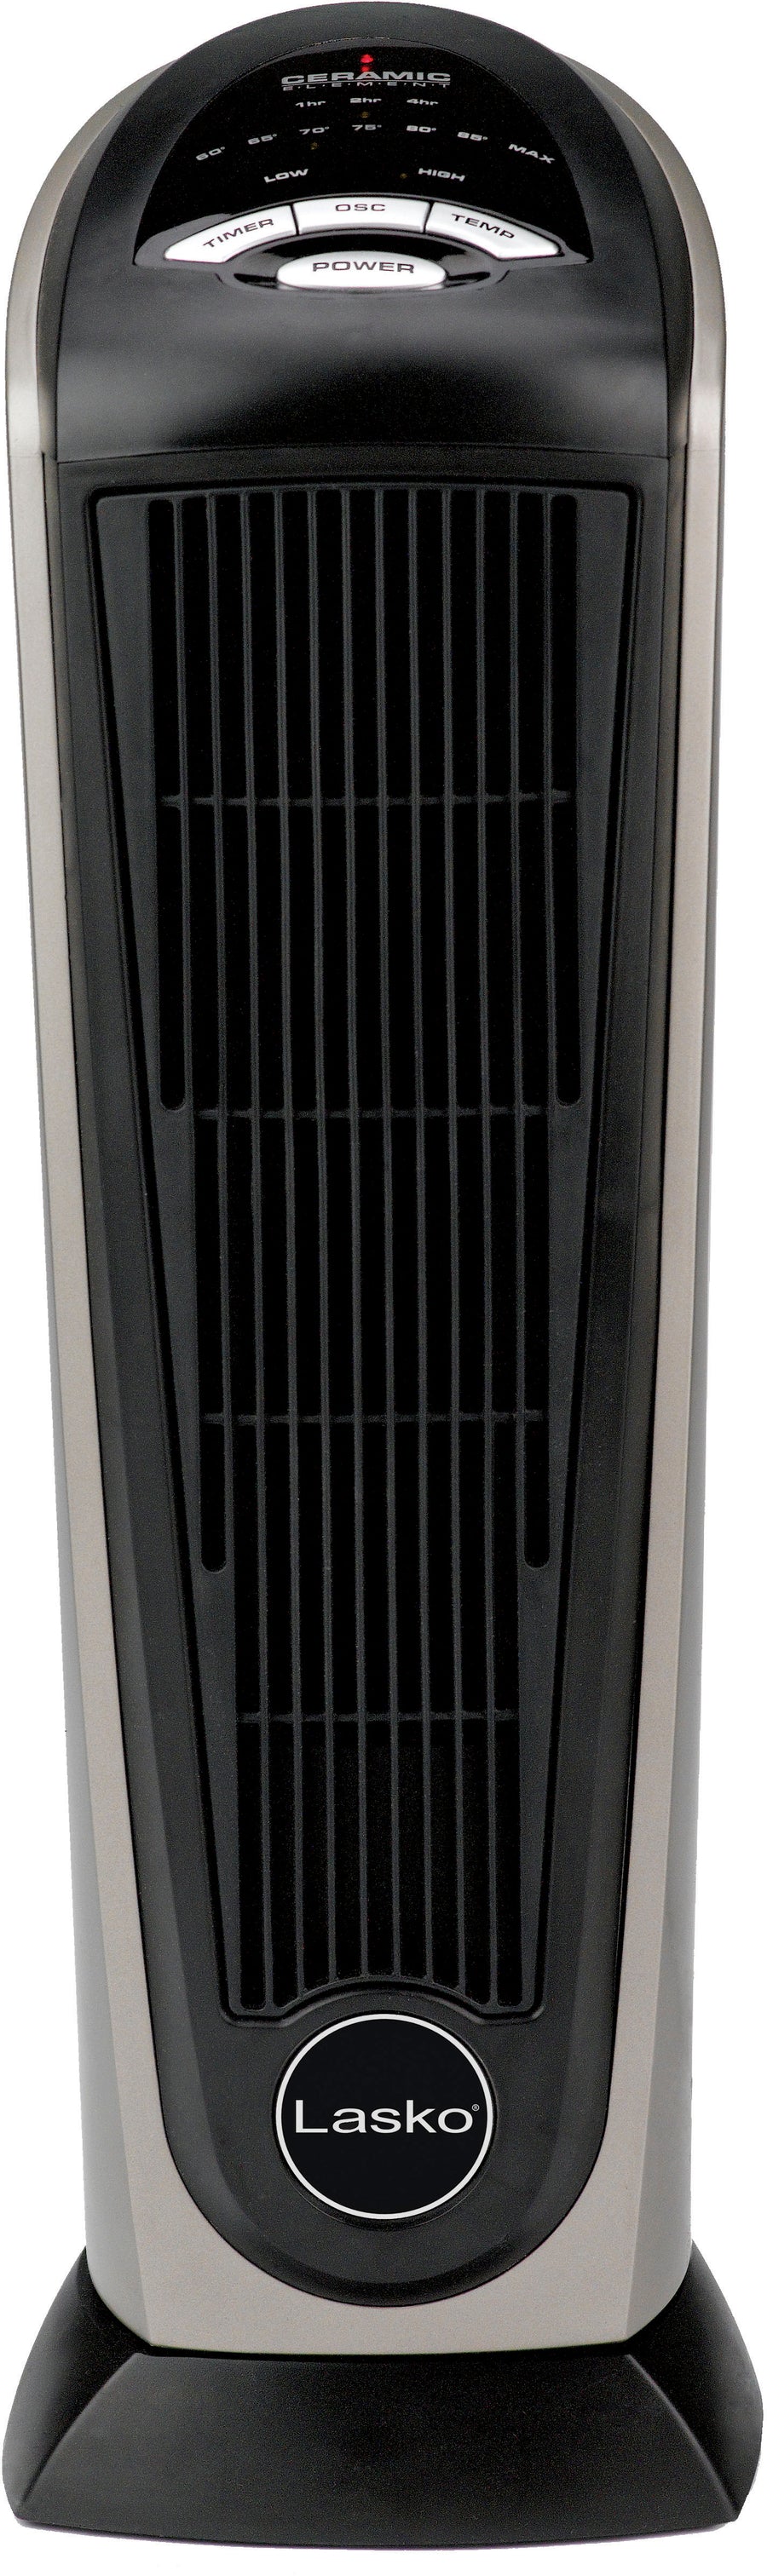 Lasko - Ceramic Tower Space Heater with Remote Control - Black/Silver_0